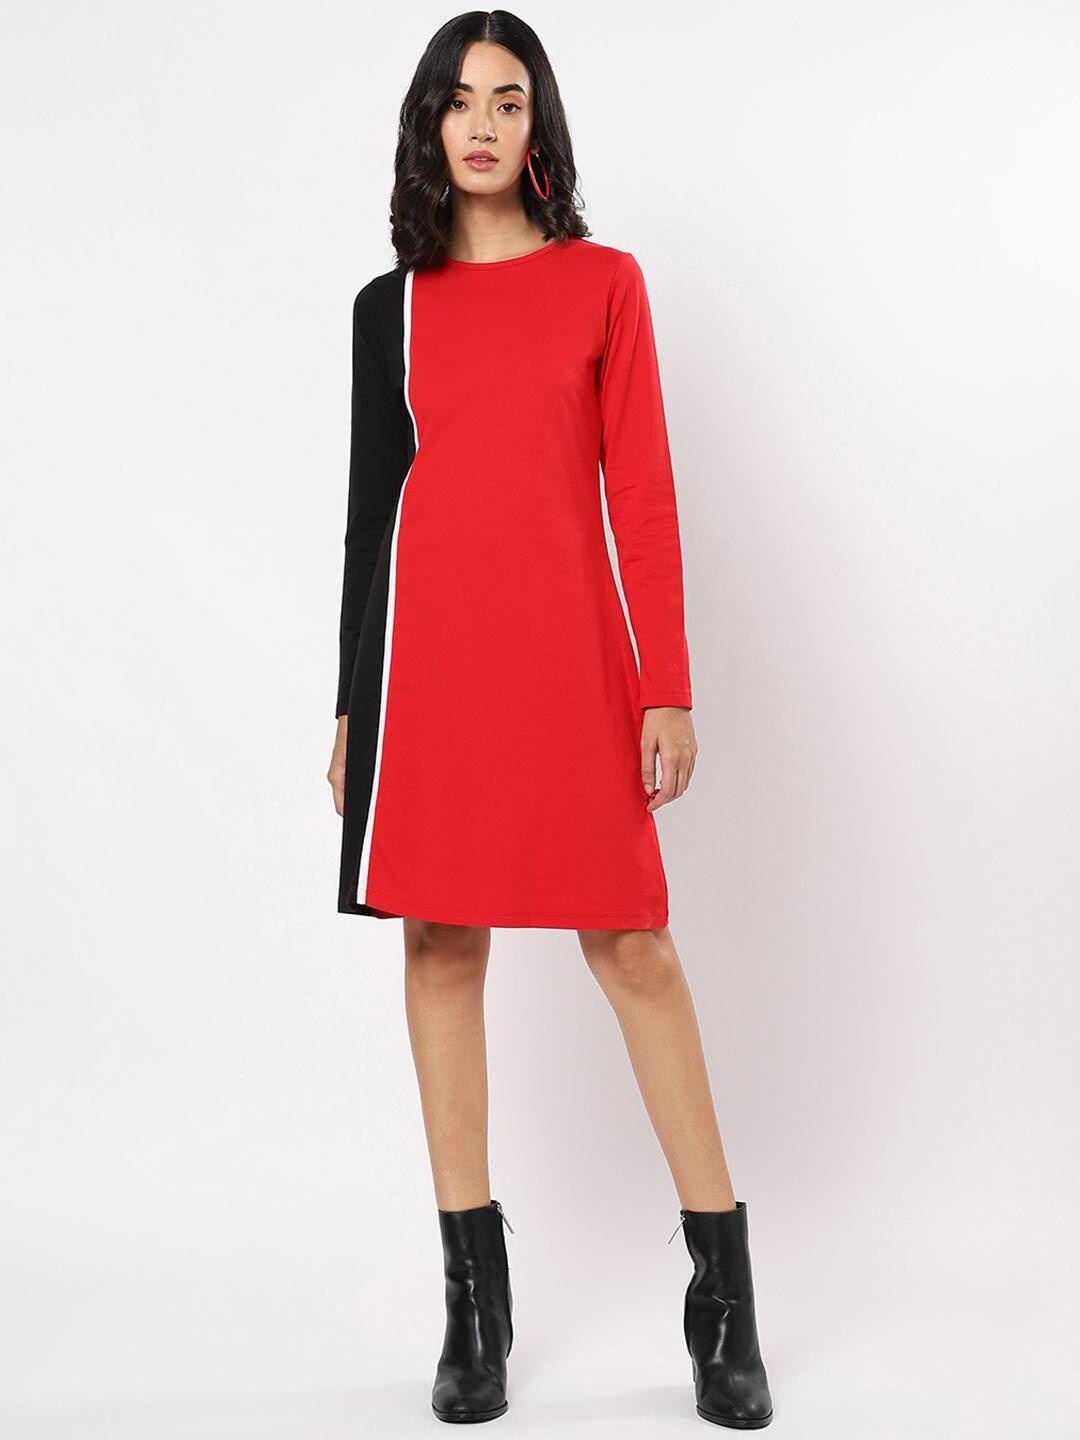 Bewakoof Red & Black Colourblocked A-Line Dress